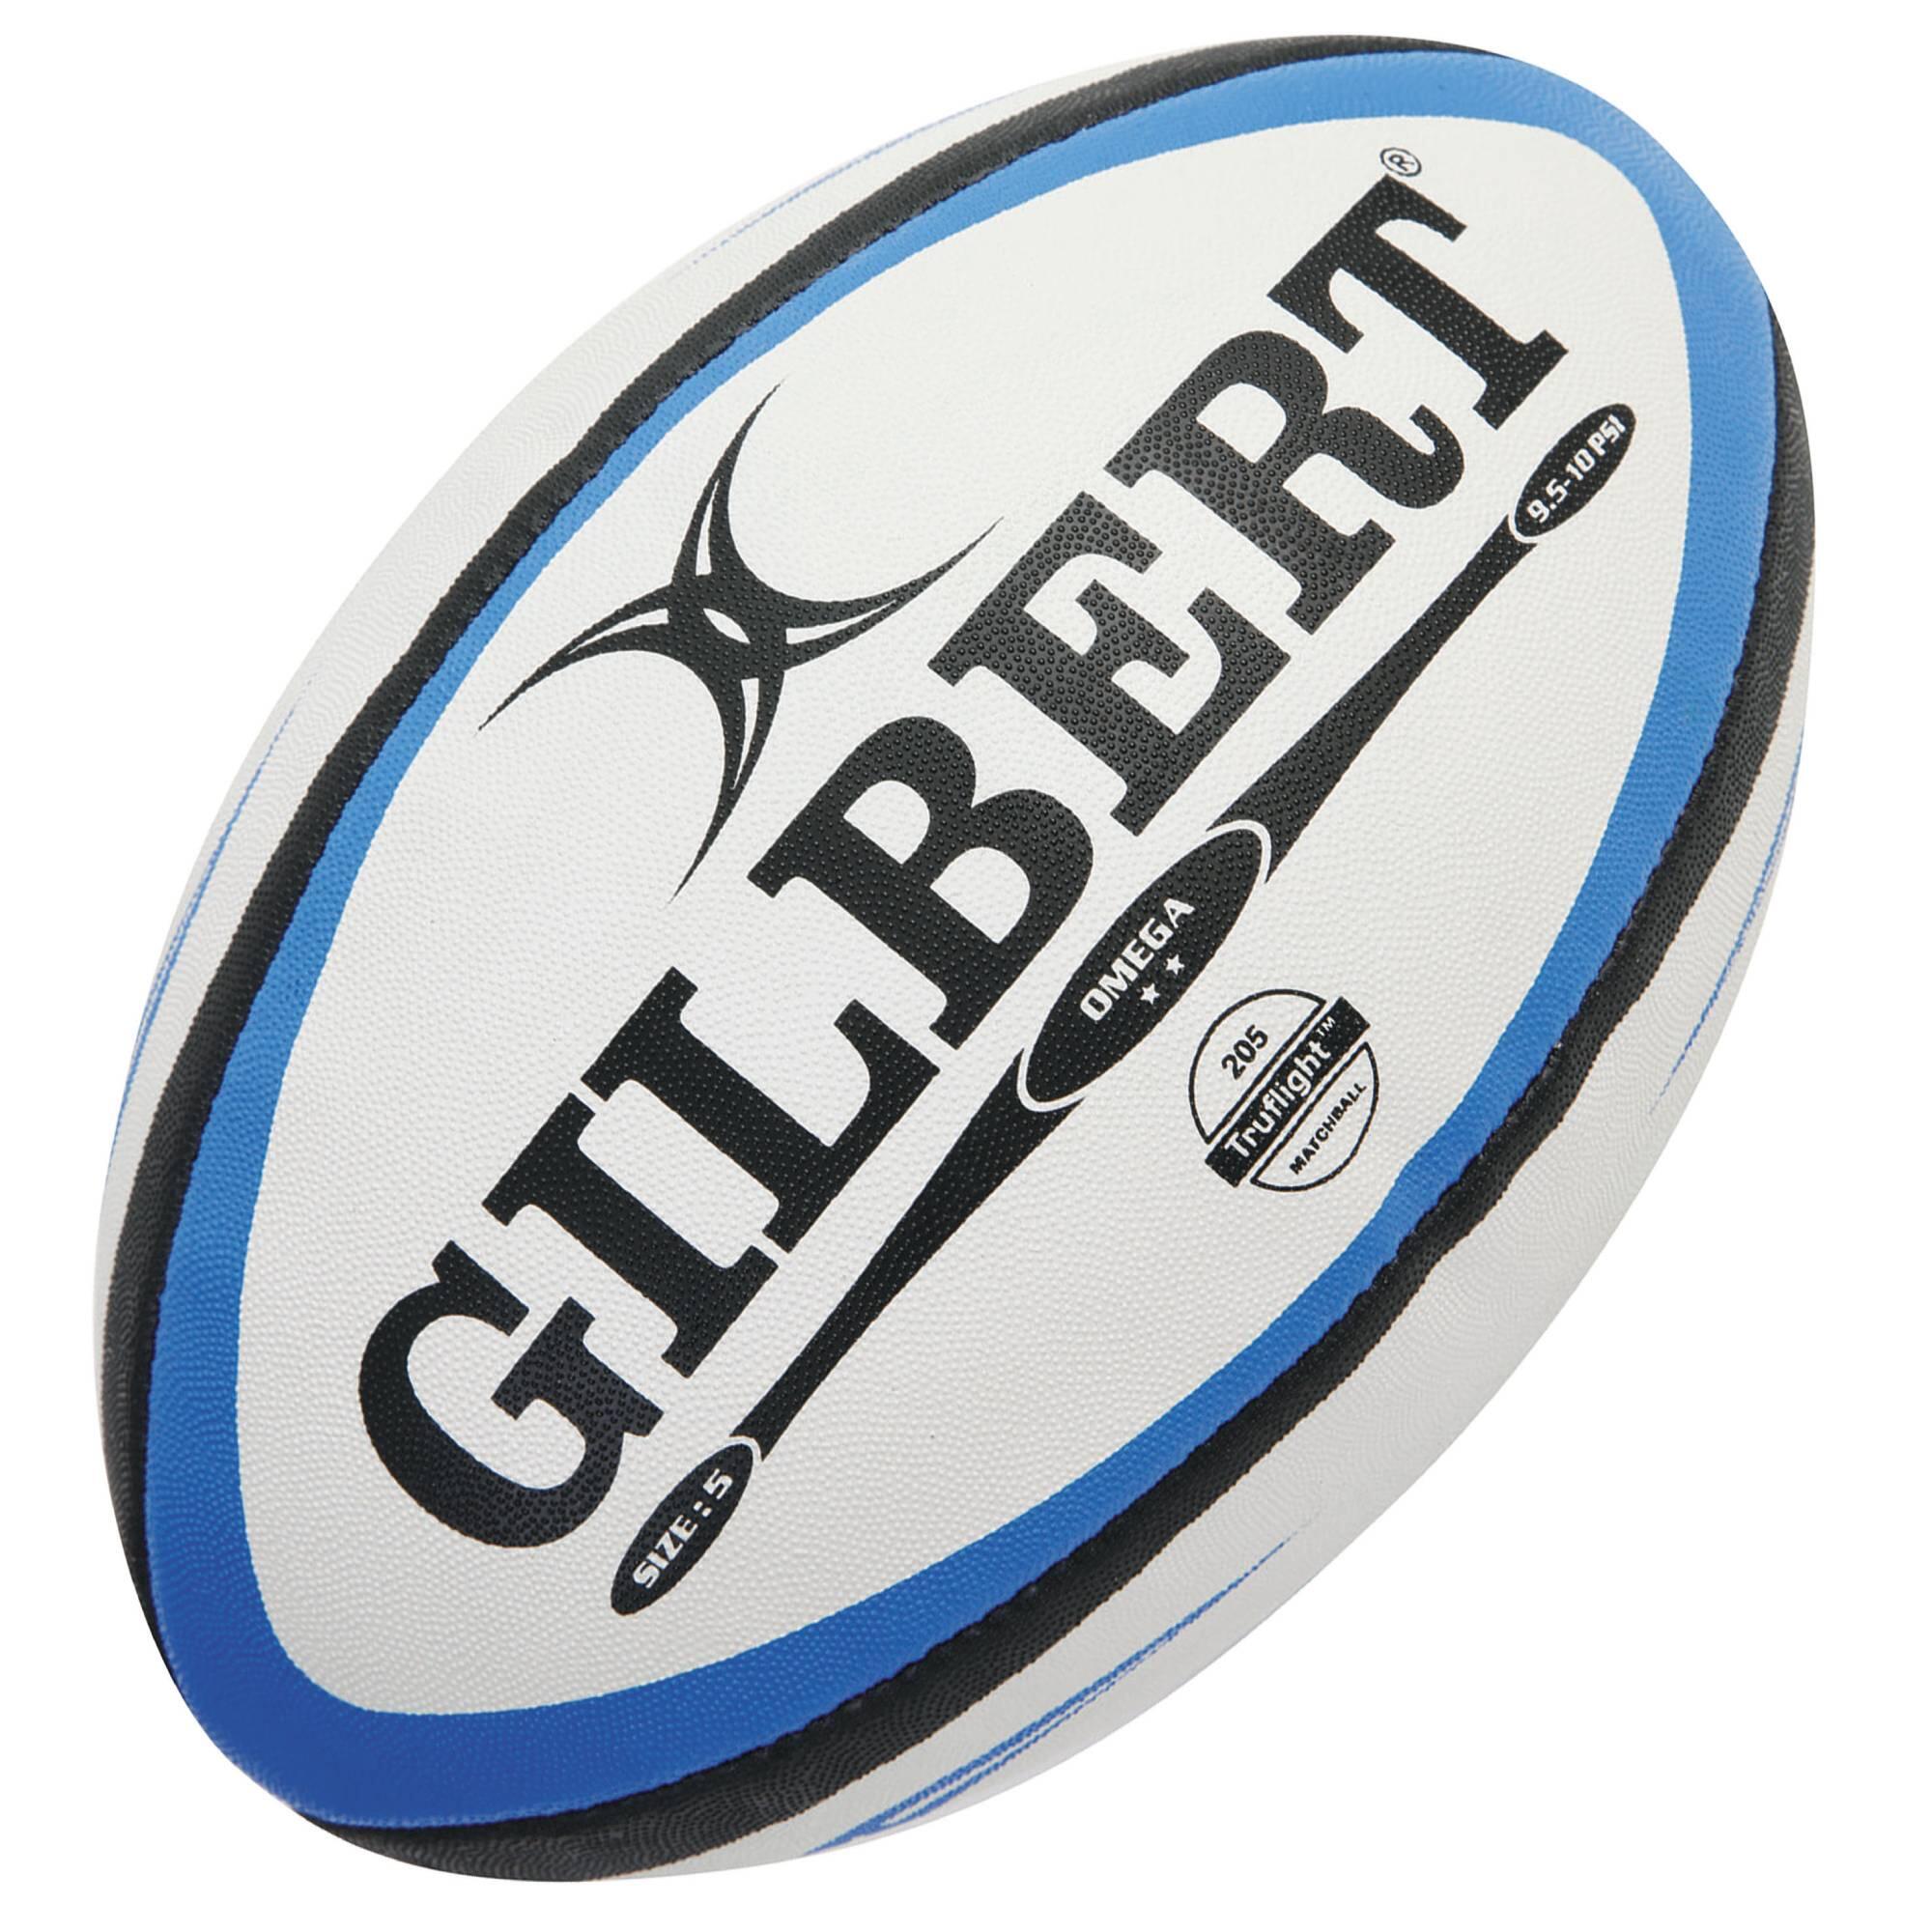 Minge Rugby Omega Marimea 5 Albastru GILBERT